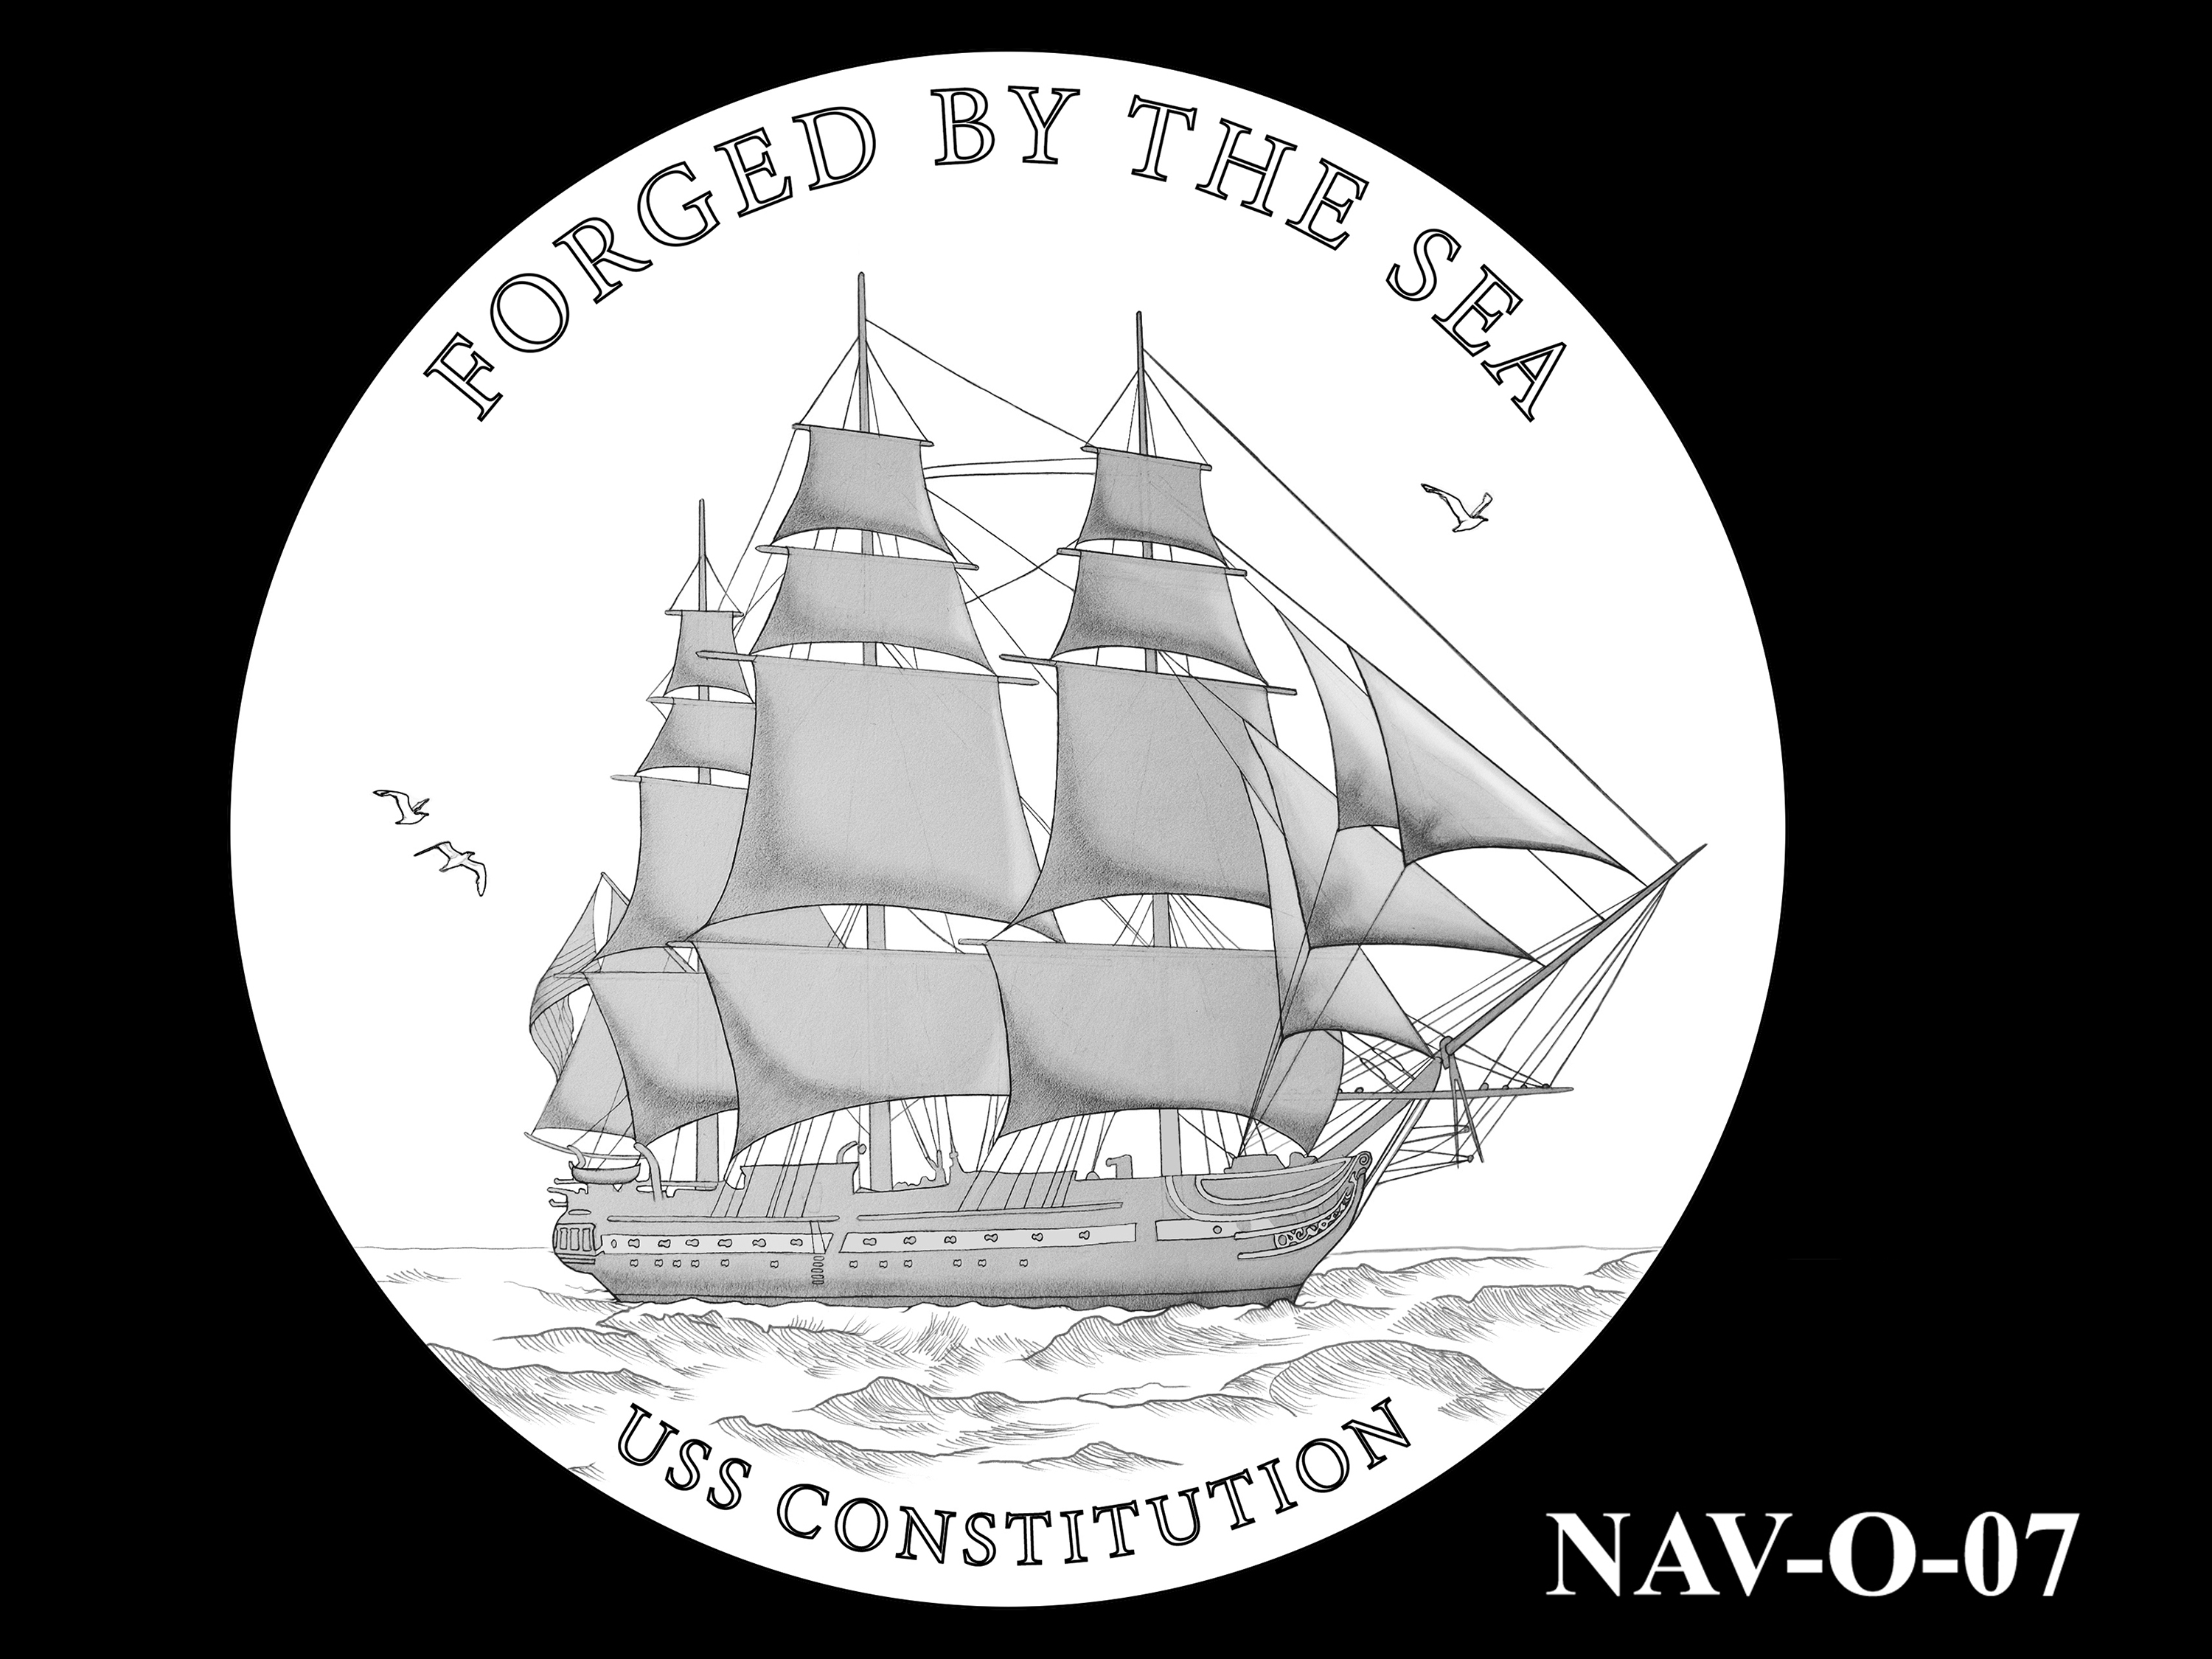 NAV-O-07 -- 2021 United States Navy Silver Medal  - Obverse